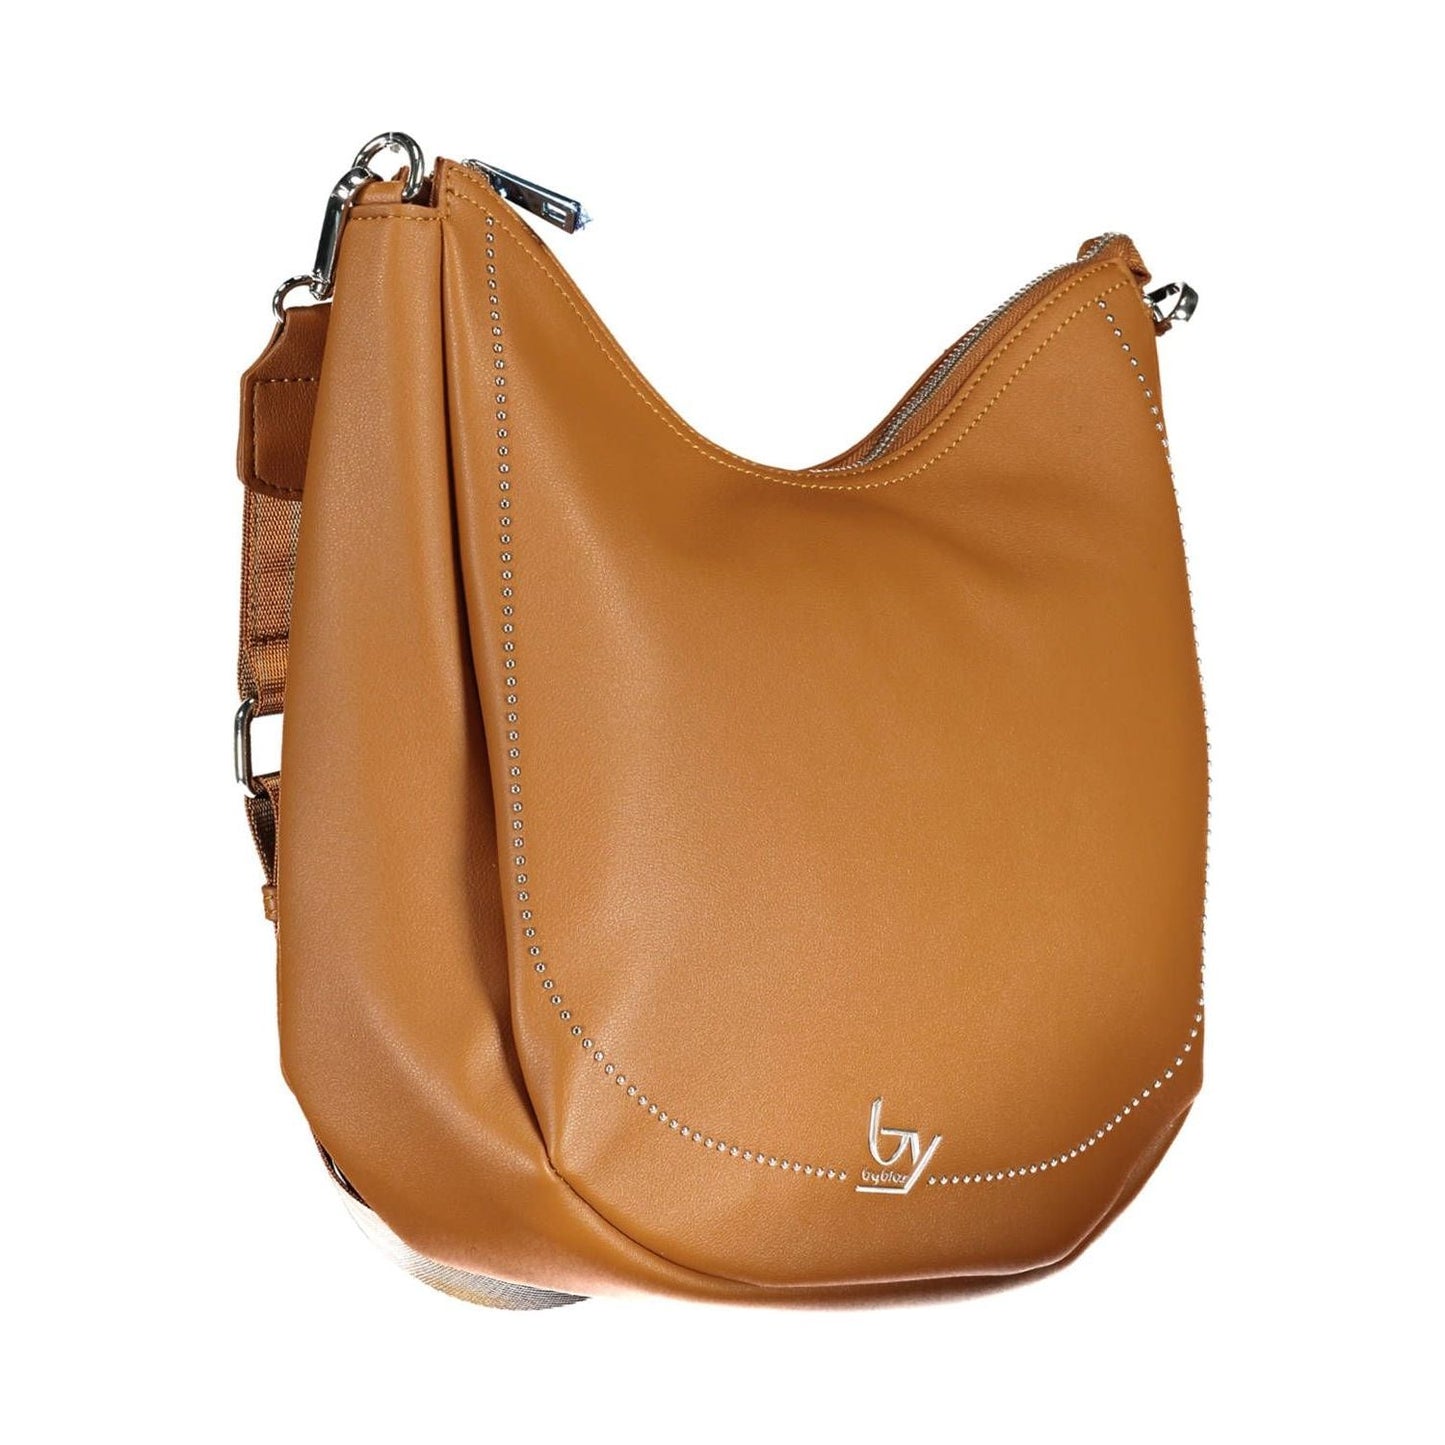 BYBLOS Chic Brown Handbag with Contrasting Details chic-brown-handbag-with-contrasting-details